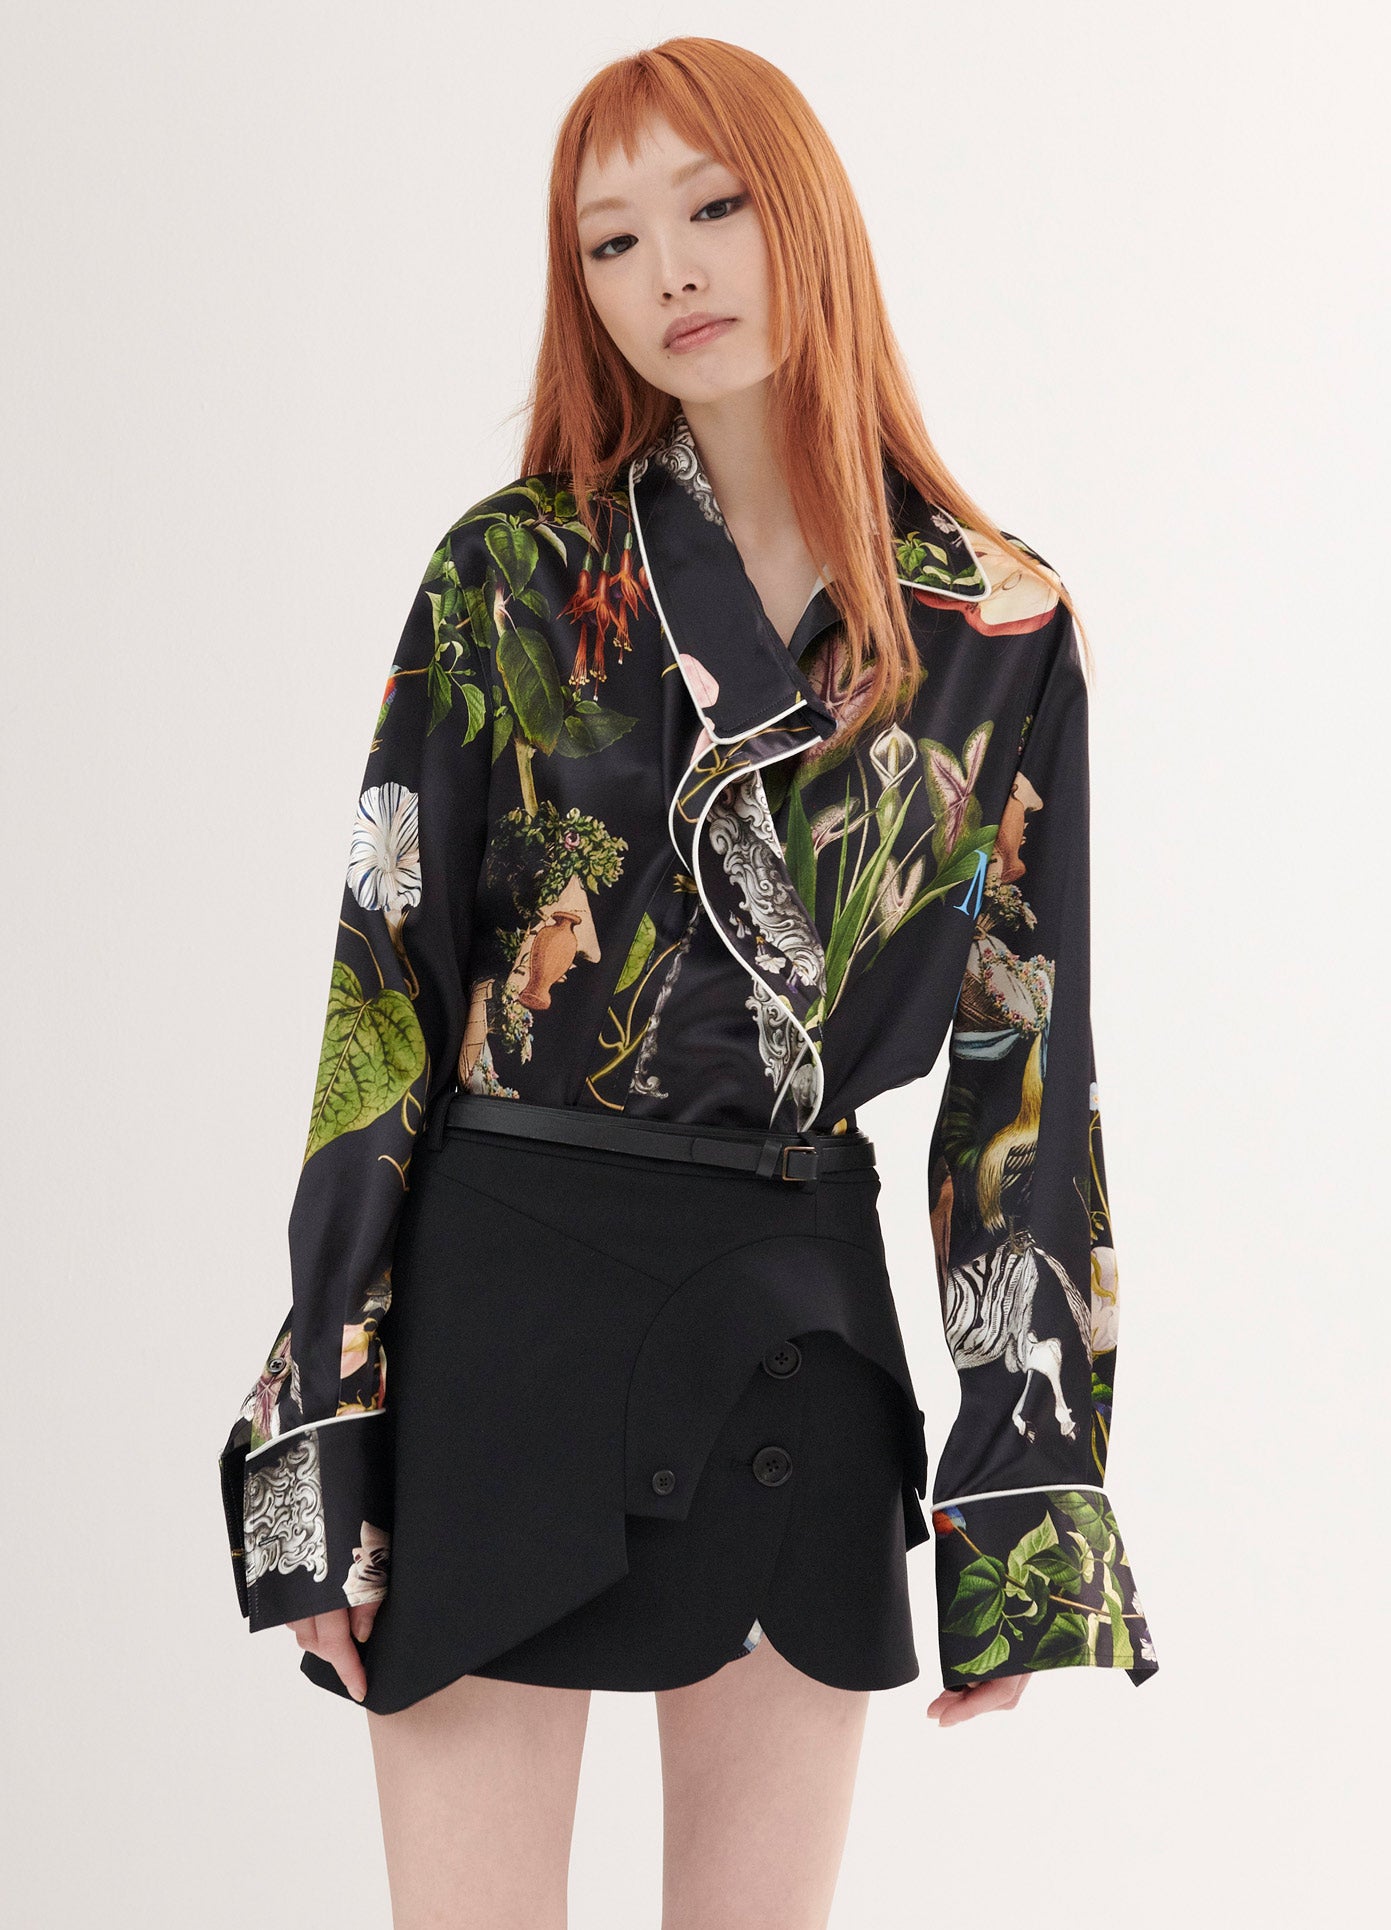 MONSE Print Pyjama Blouse in Black Print on Model Front View